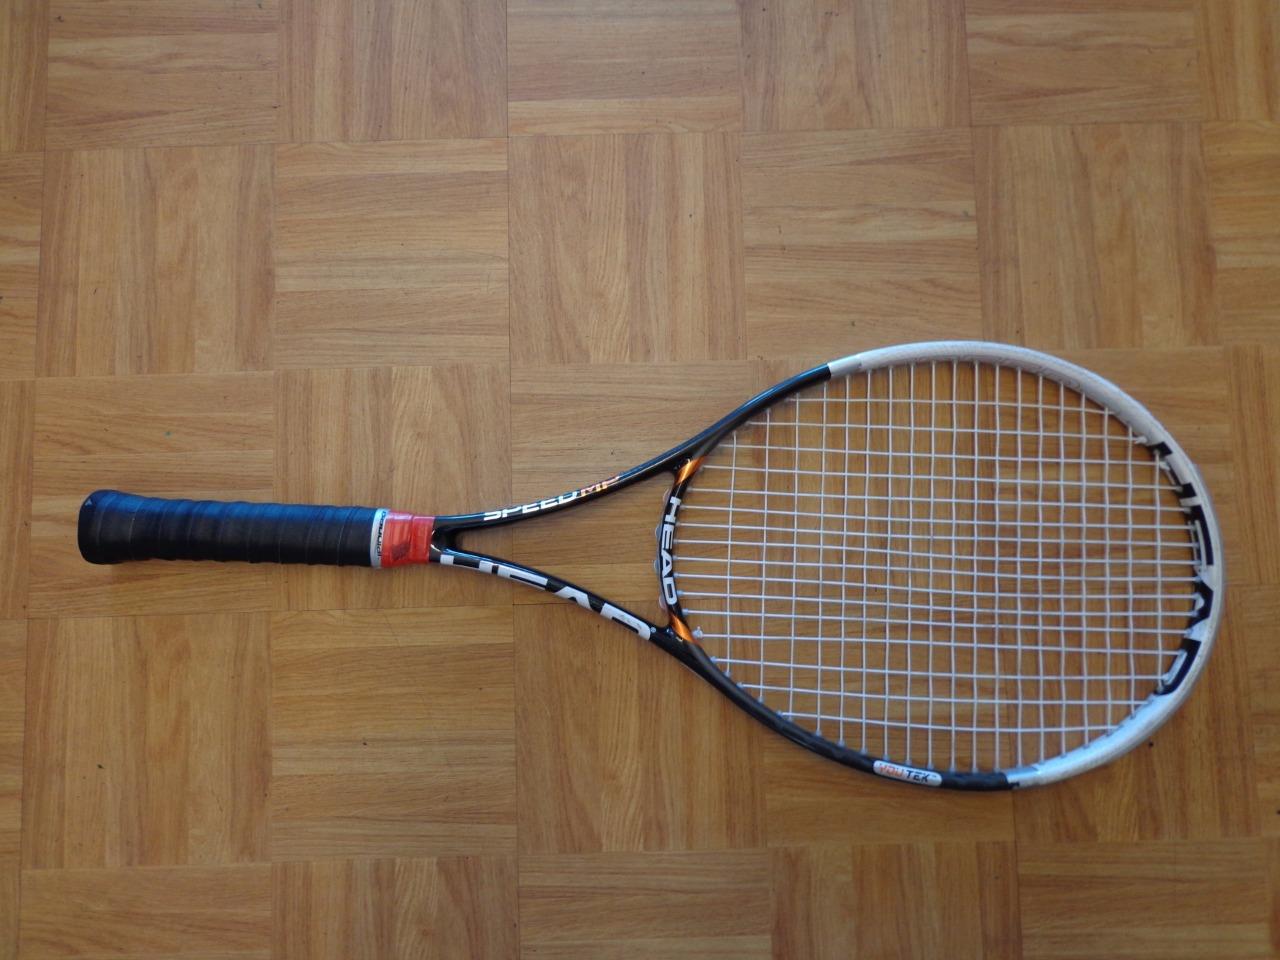 Head Youtek IG Speed MP 315 16x19 100 head 4 3/8 grip Tennis Racquet - Photo 1 sur 1